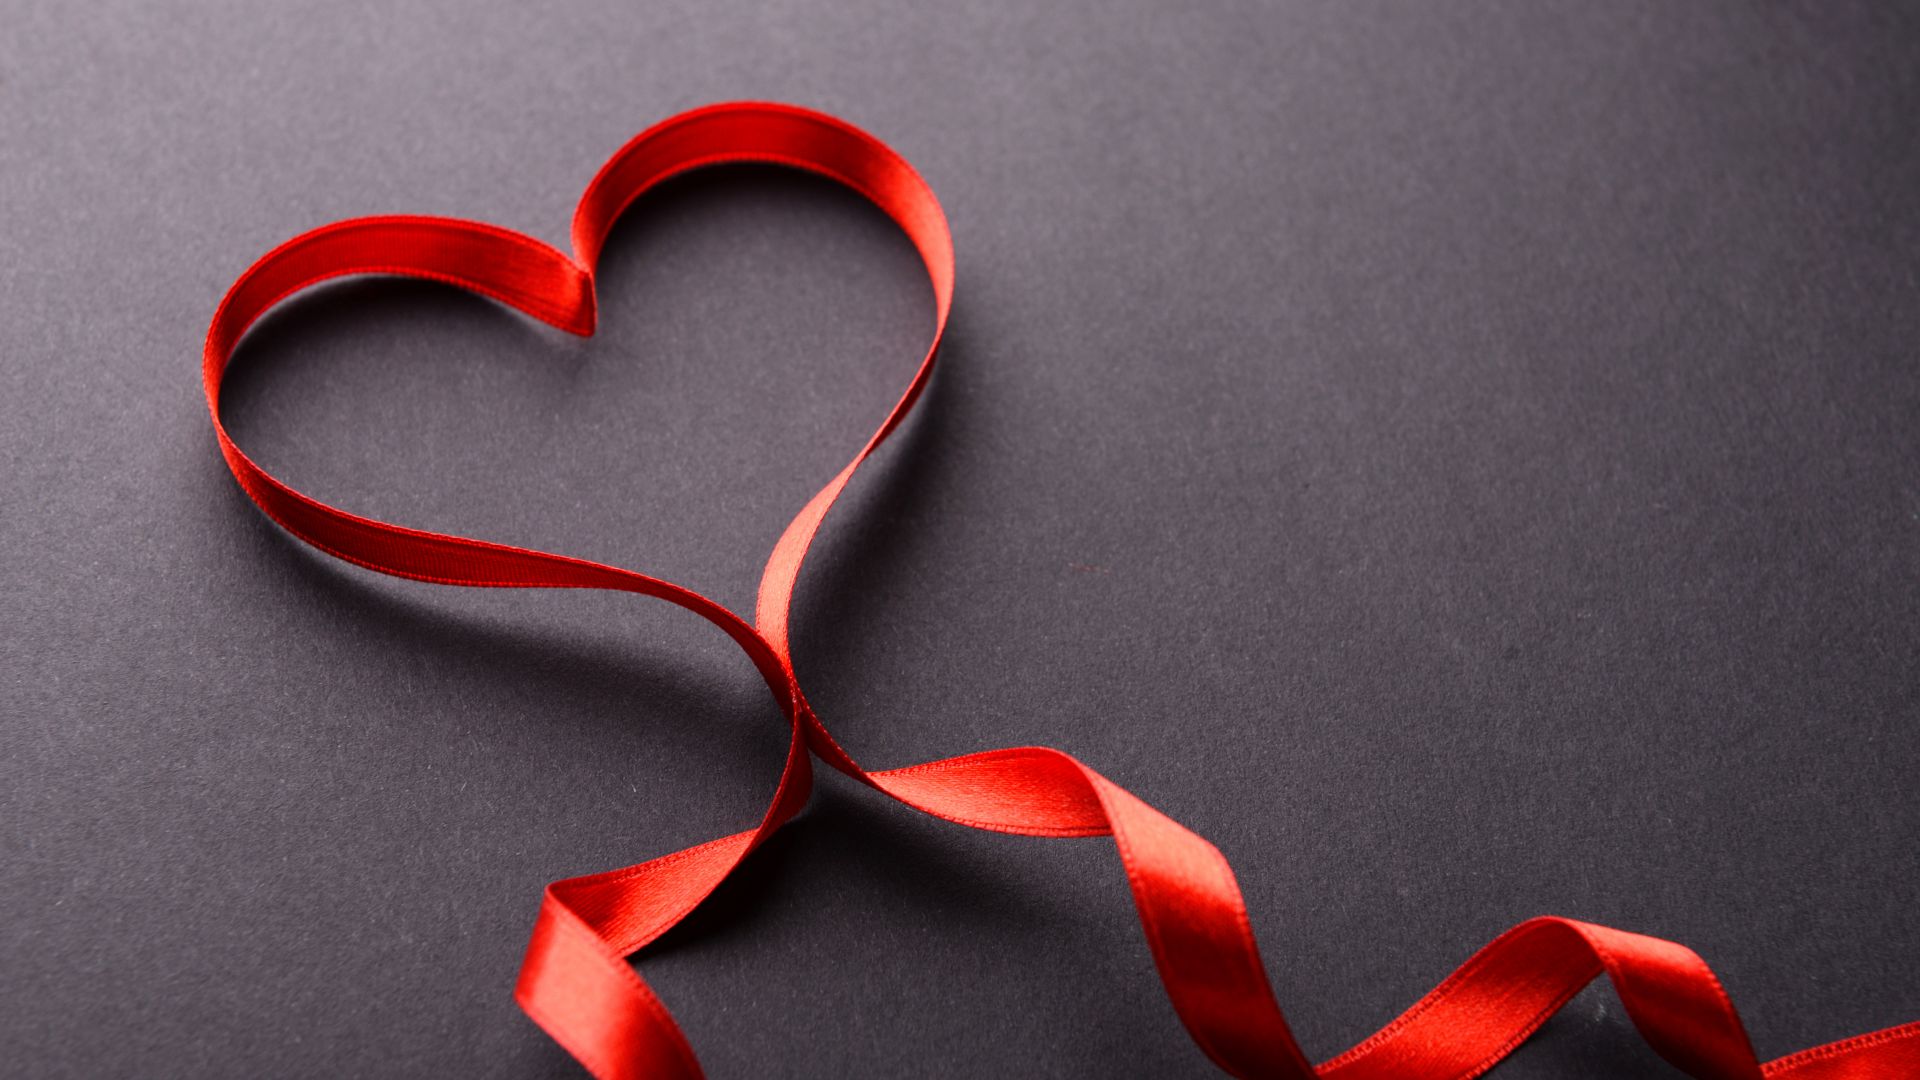 фото любовь, сердце, love image, heart, ribbon, 5k (horizontal)